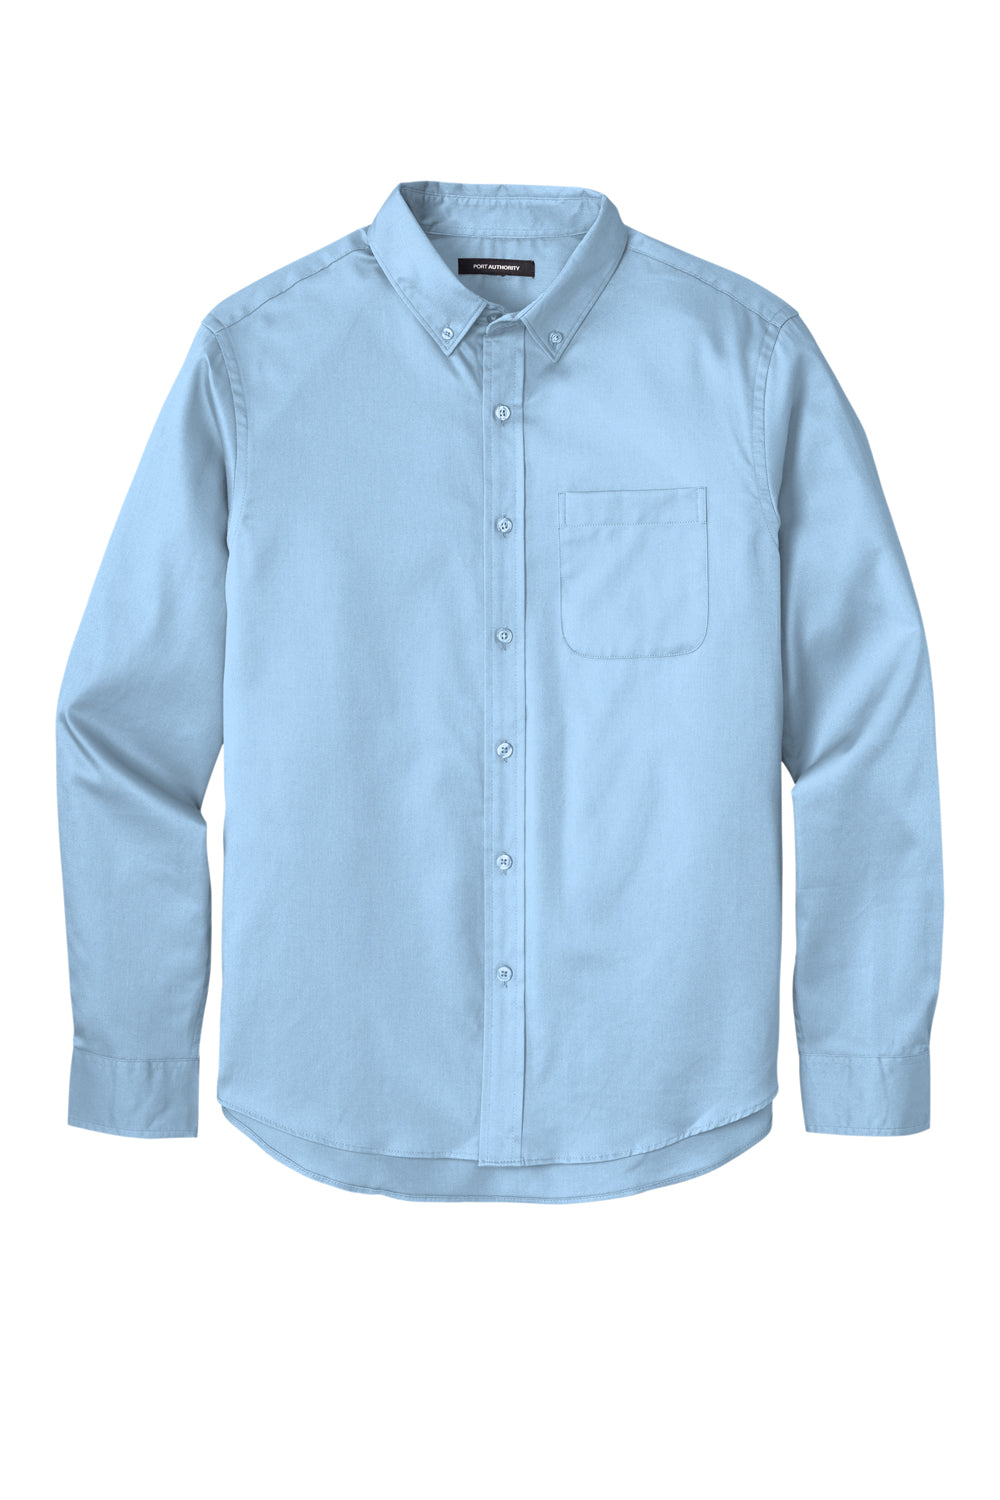 Port Authority W808 SuperPro Wrinkle Resistant React Long Sleeve Button Down Shirt w/ Pocket Cloud Blue Flat Front